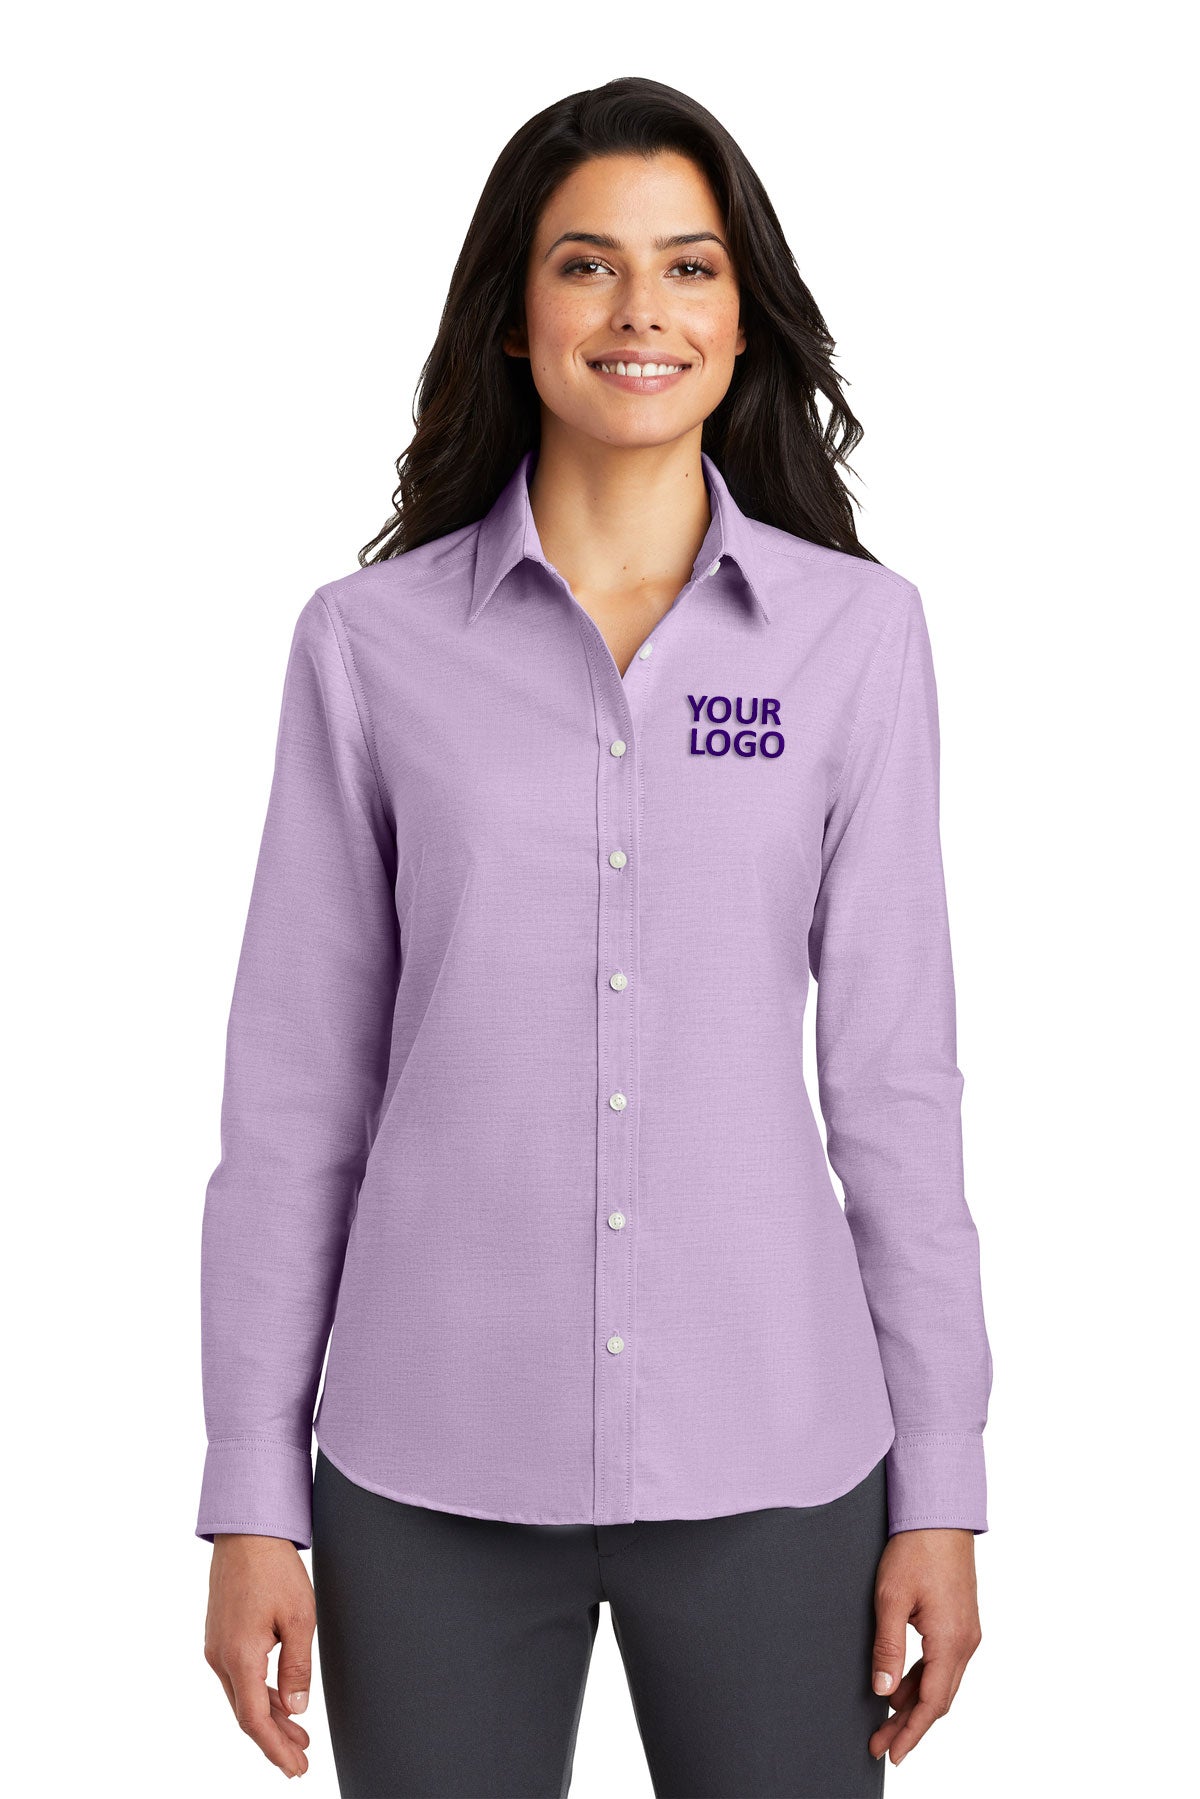 Port Authority Soft Purple L658 company logo shirts